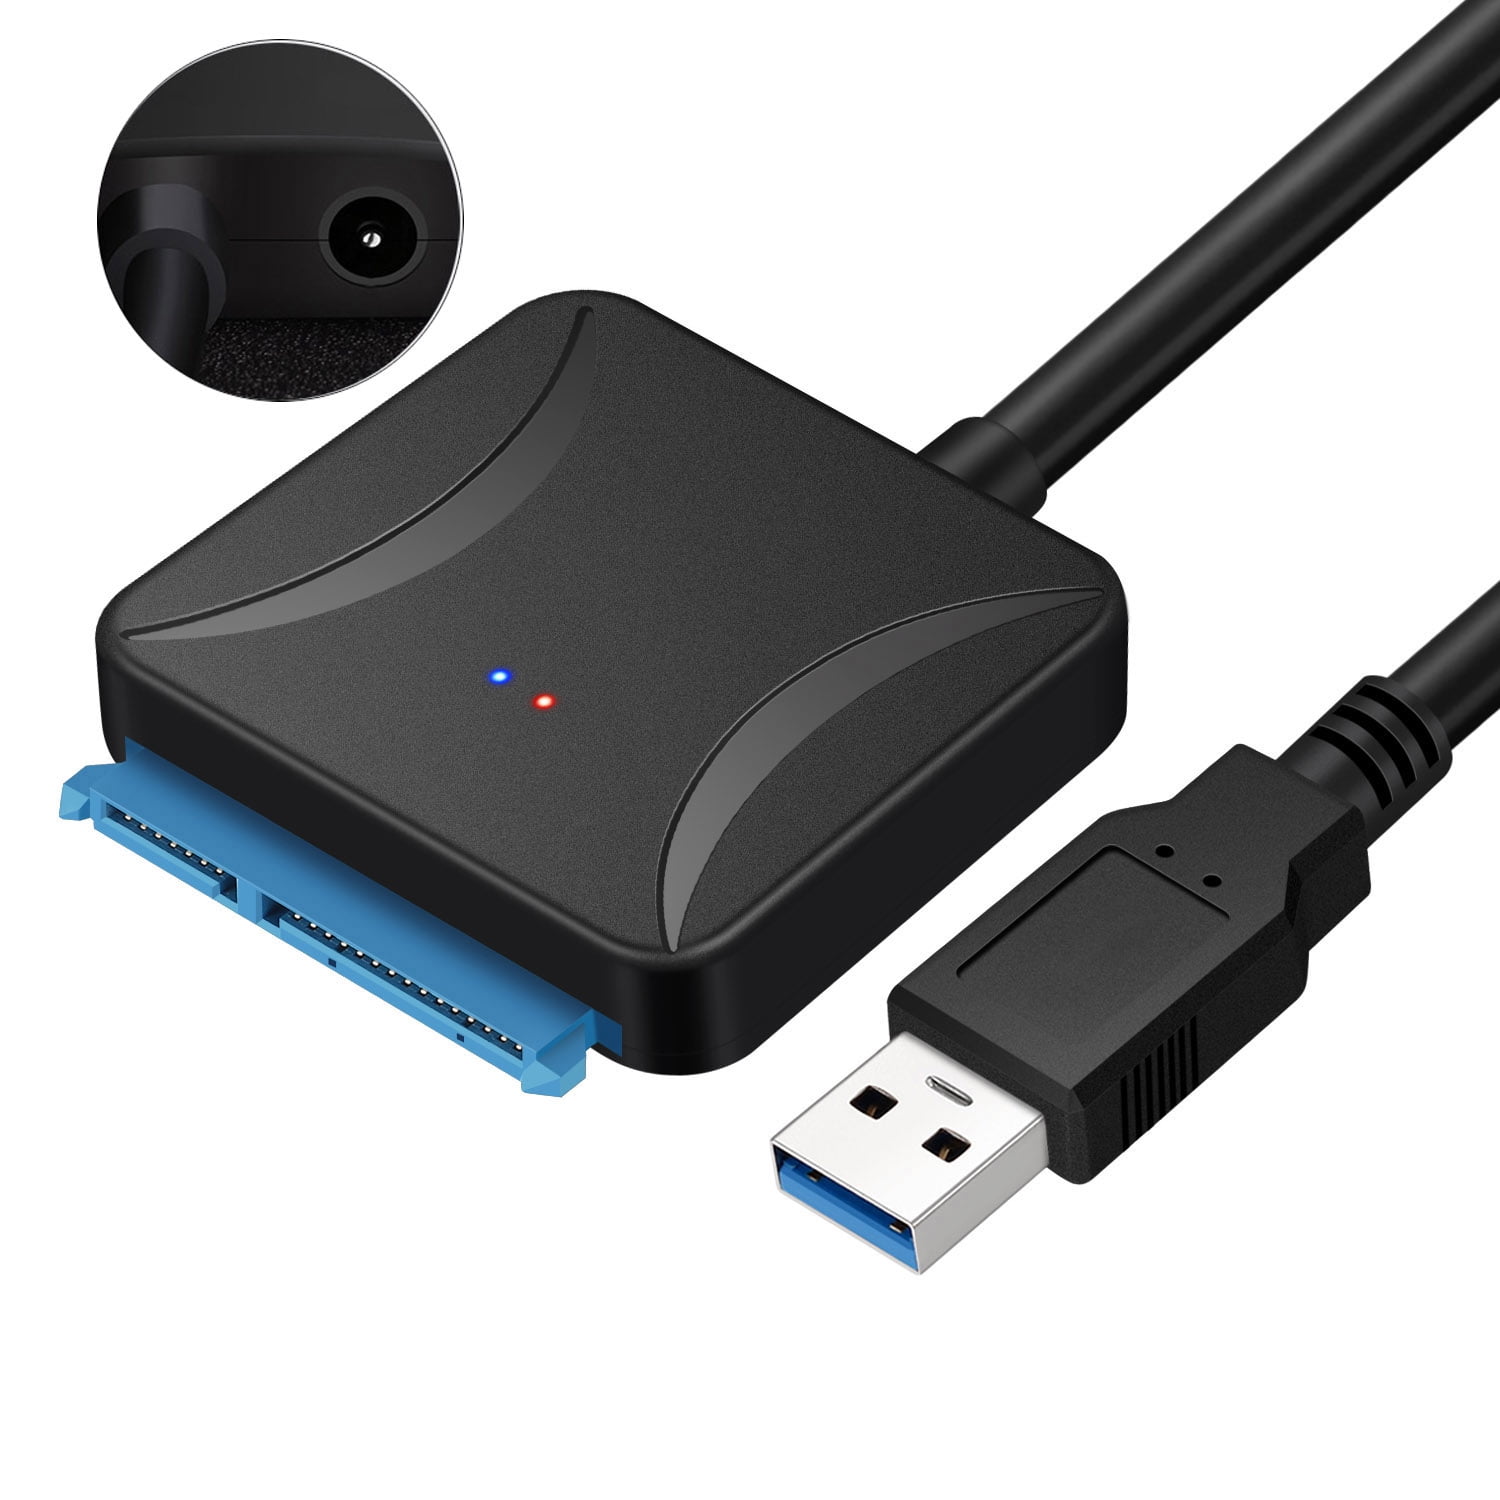 cache Papúa Nueva Guinea lanzador SATA to USB 3.0 Adapter Hard Drive Cable External Disk Reader Lead Clone  Kit Connector UASP Enclosure for 2.5 3.5 Samsung Crucial WD Seagate Toshiba  Internal HDD SSD,PS4,Xbox,Laptop,MacBook,TV - Walmart.com